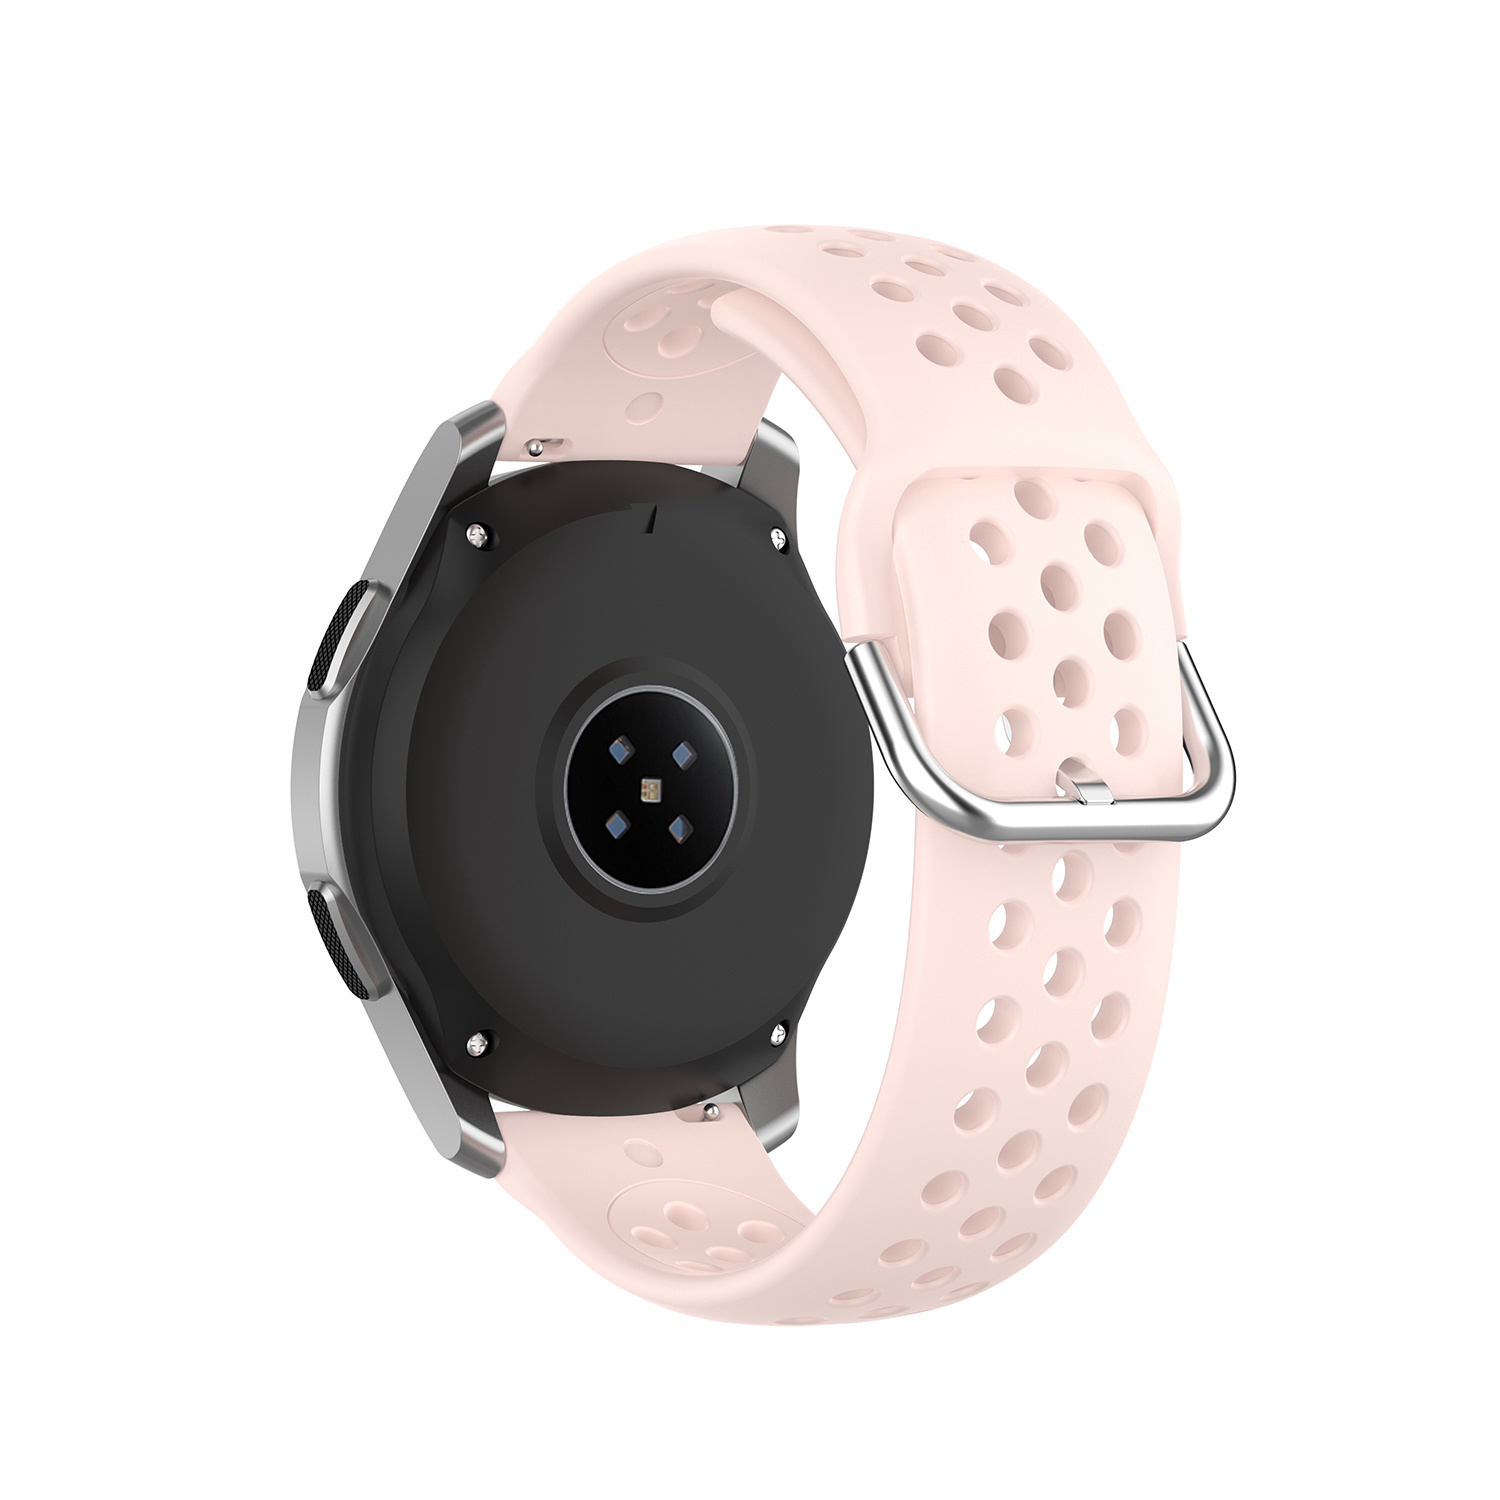 Cinturino doppia fibbia per Samsung Galaxy Watch - rosa